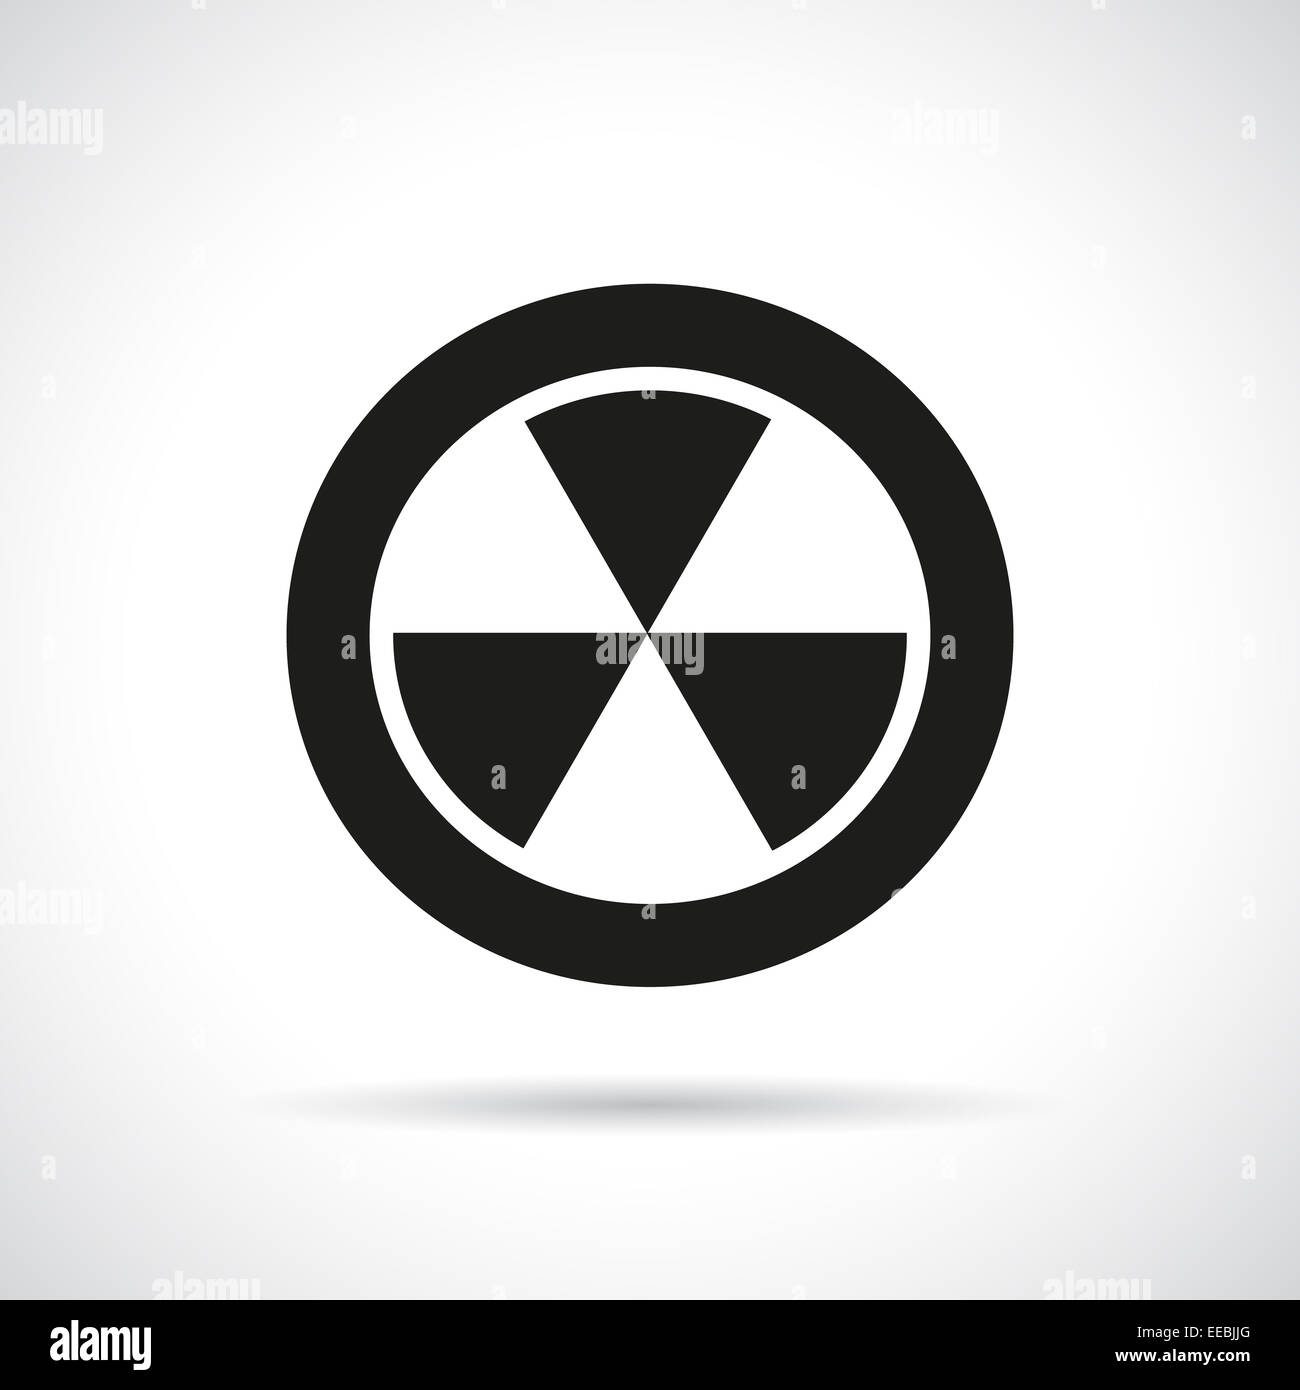 Radiation hazard symbol Stock Photo